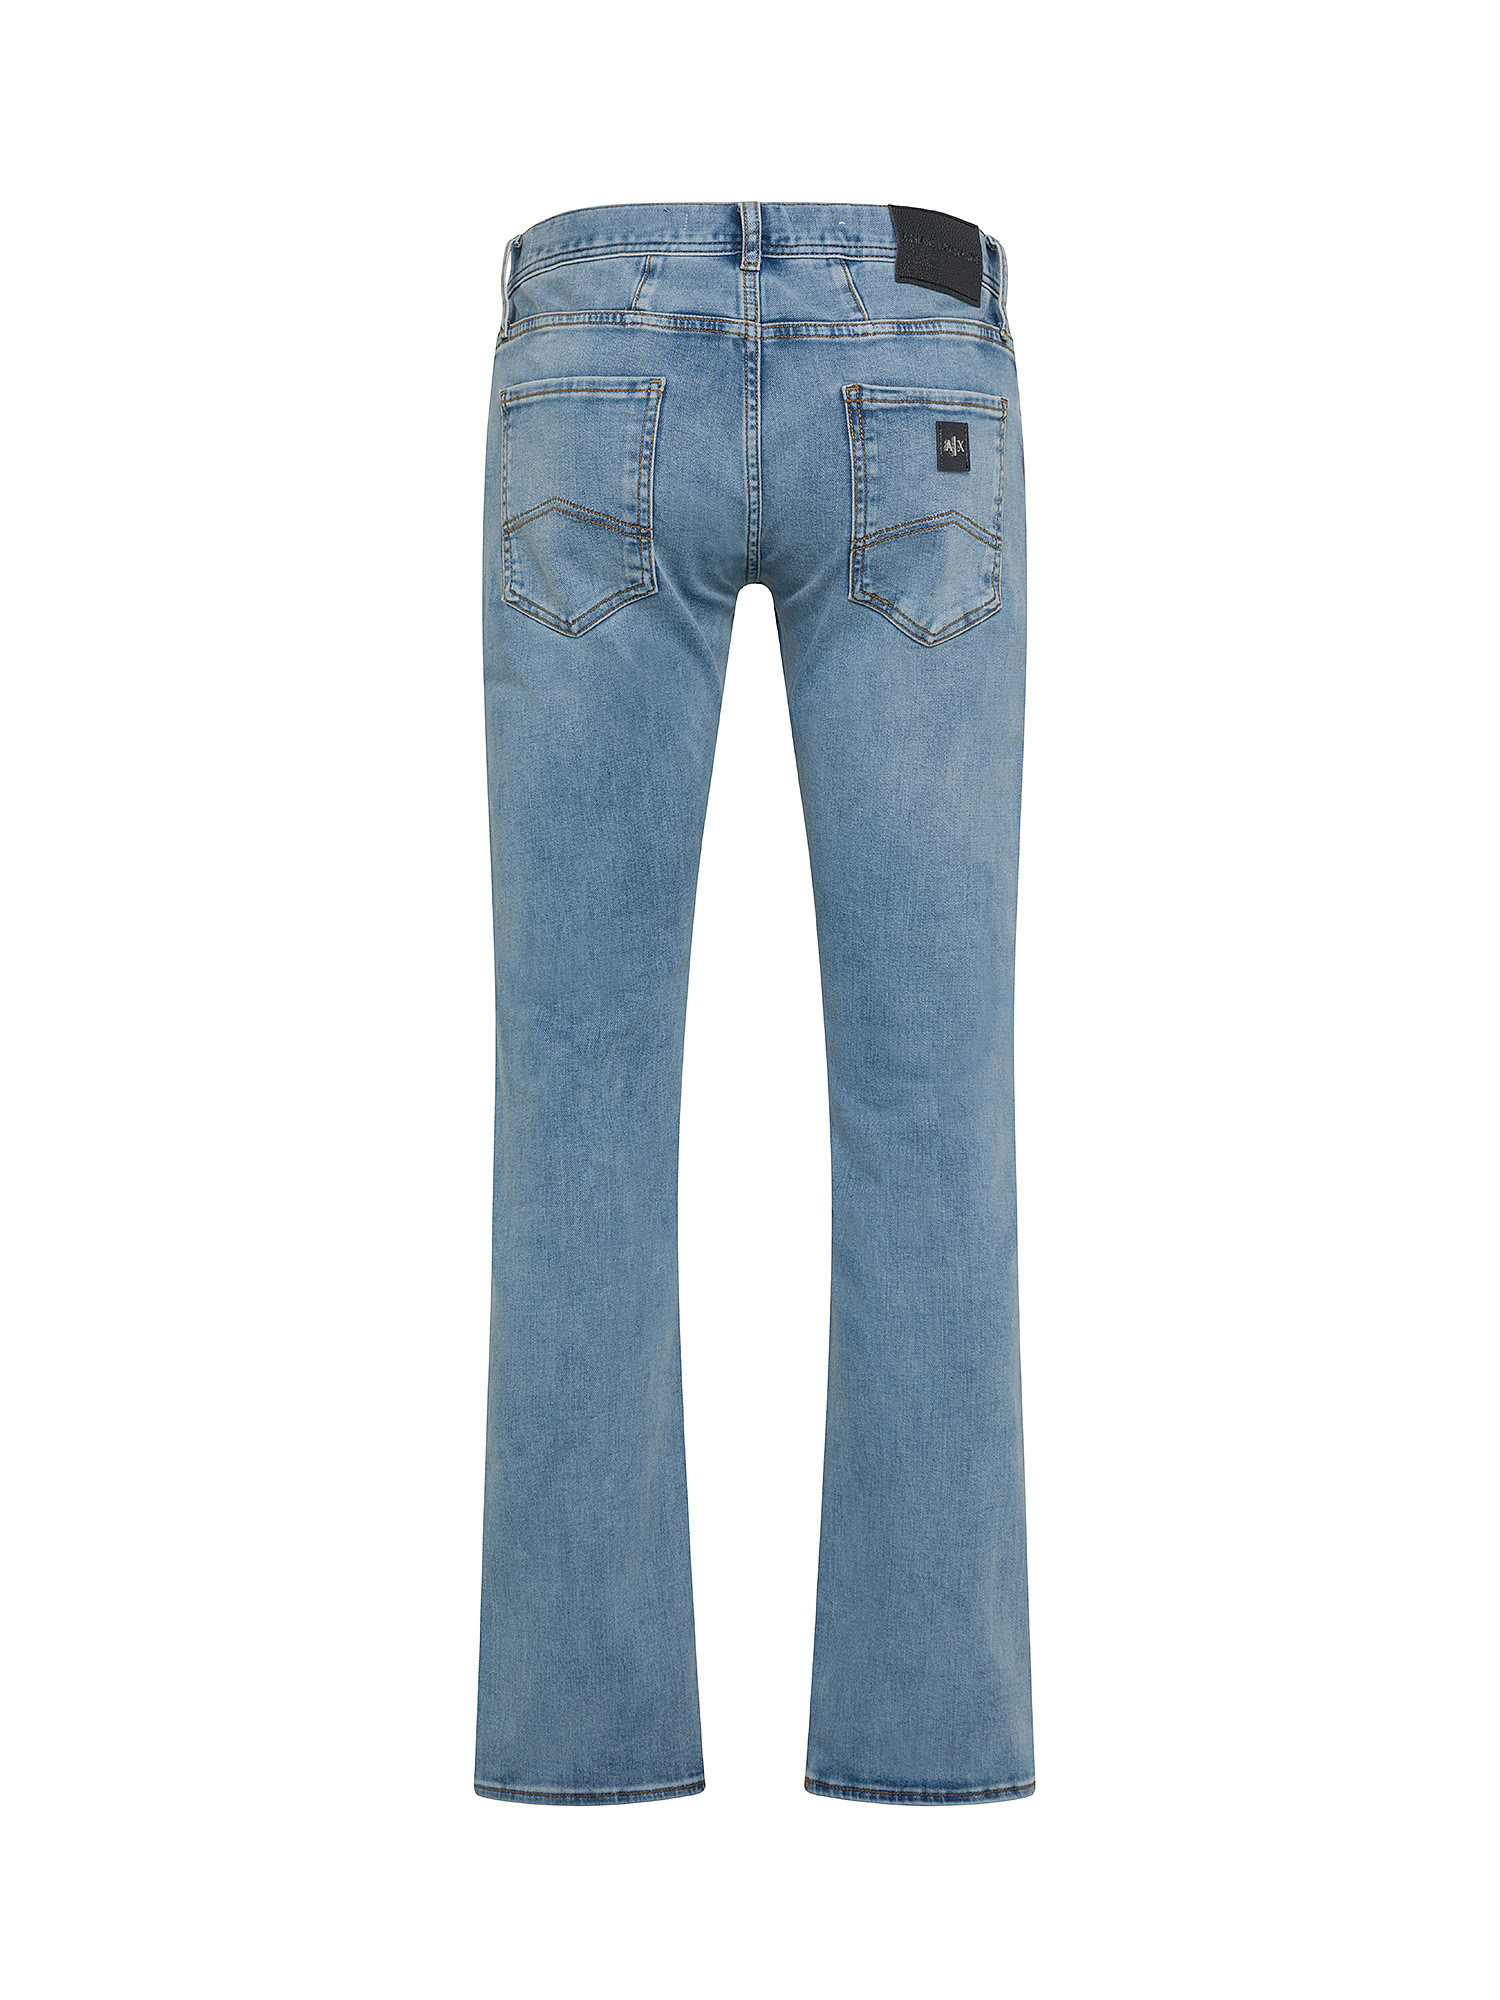 Armani Exchange - Jeans slim fit cinque tasche, Denim, large image number 1